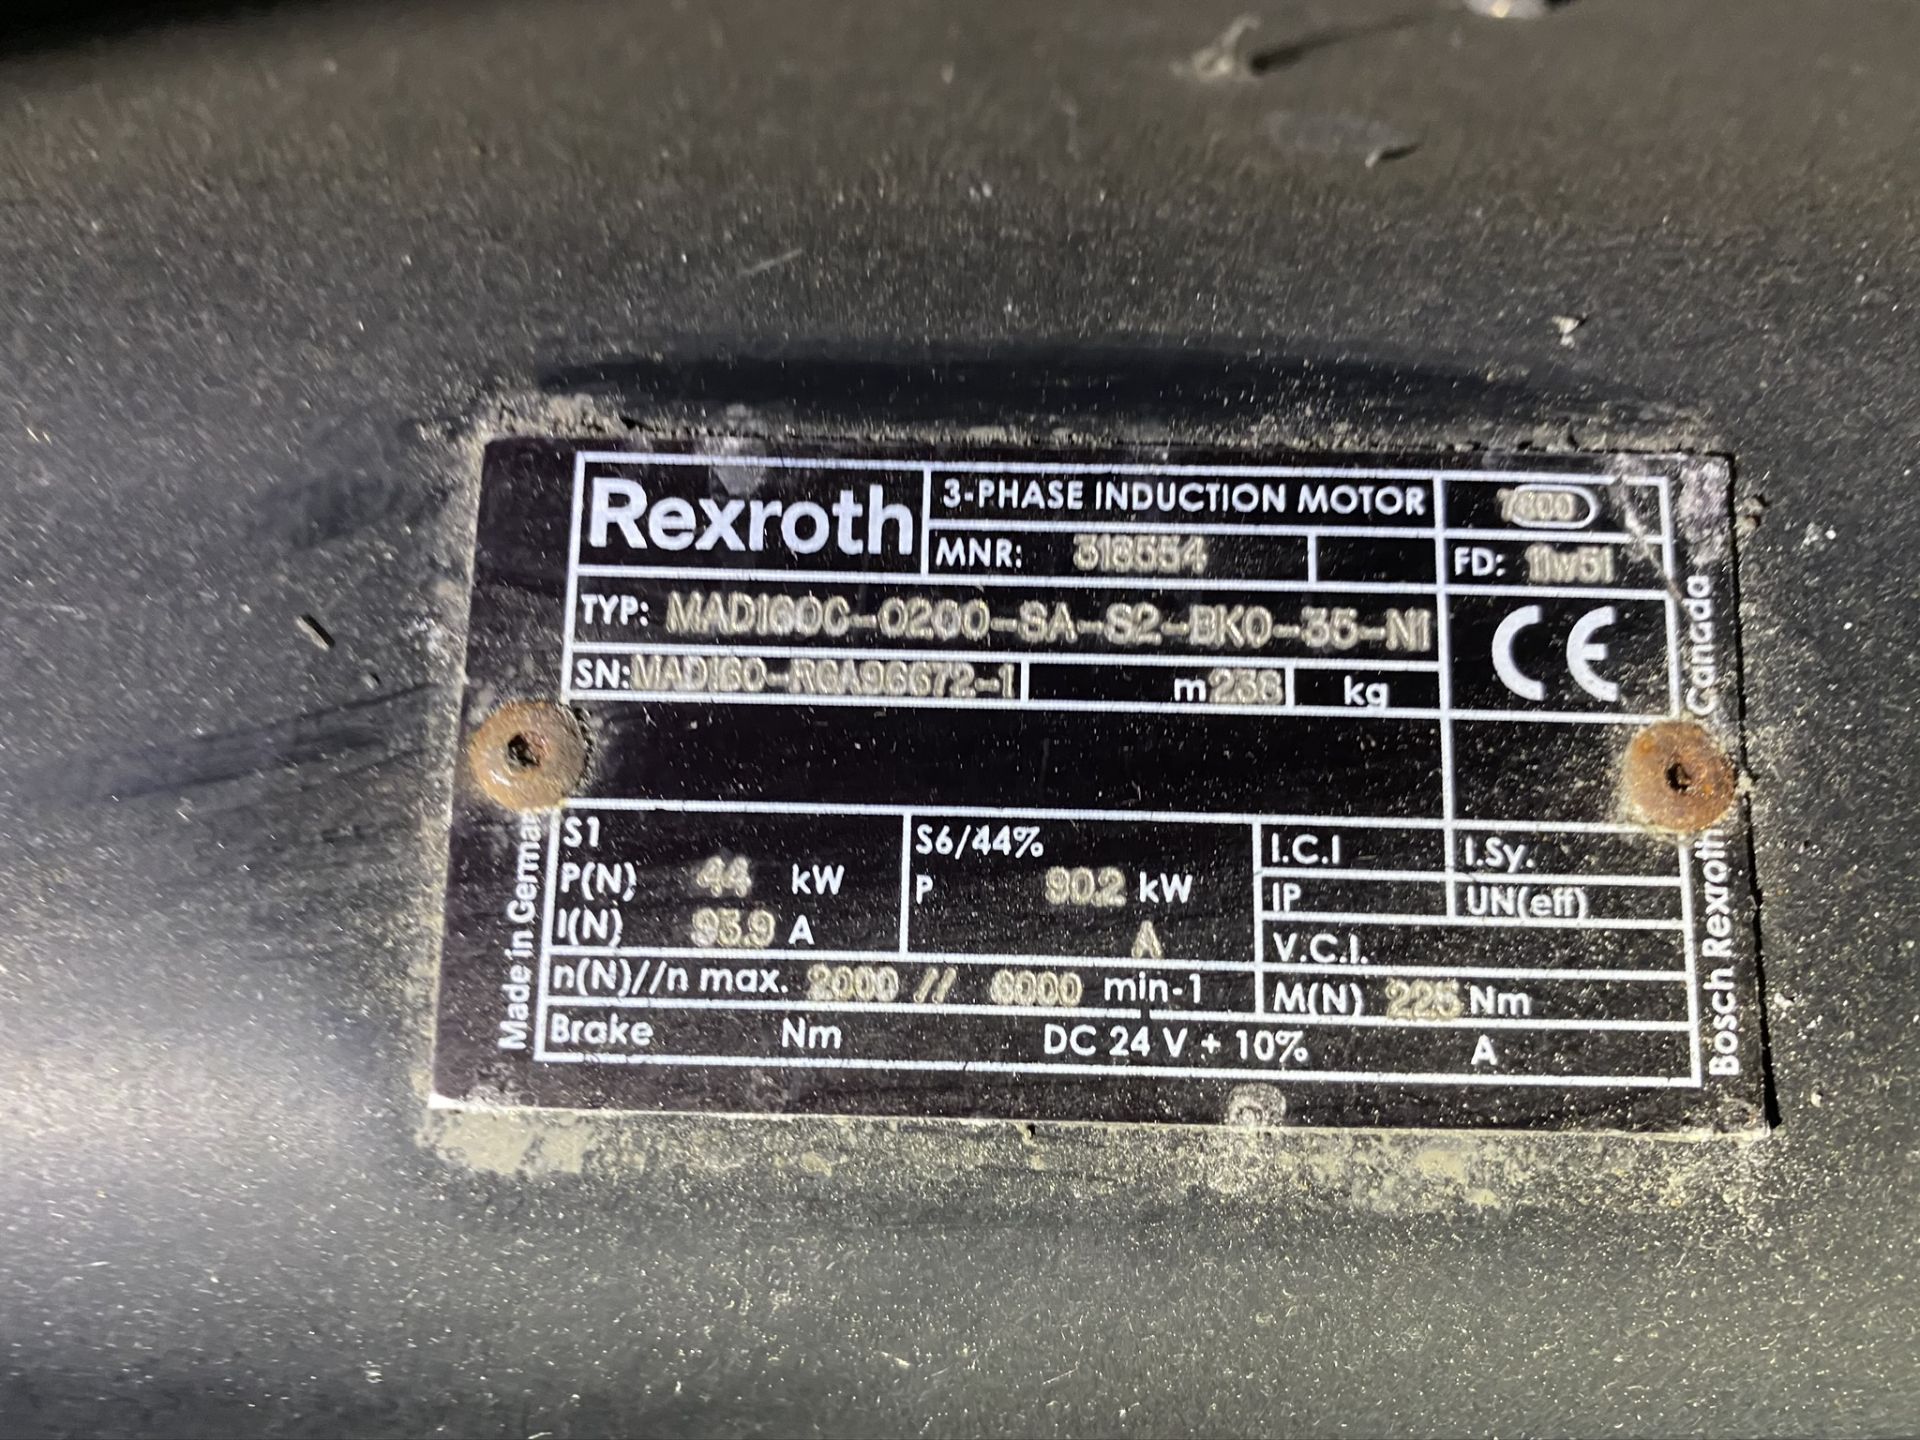 Rexroth 3-phase induction motor. Typ: MAD160C-0250-SA-BK0-35-N1. S/N: MAD160-RGA96672-1. (S.F.) - Image 3 of 3